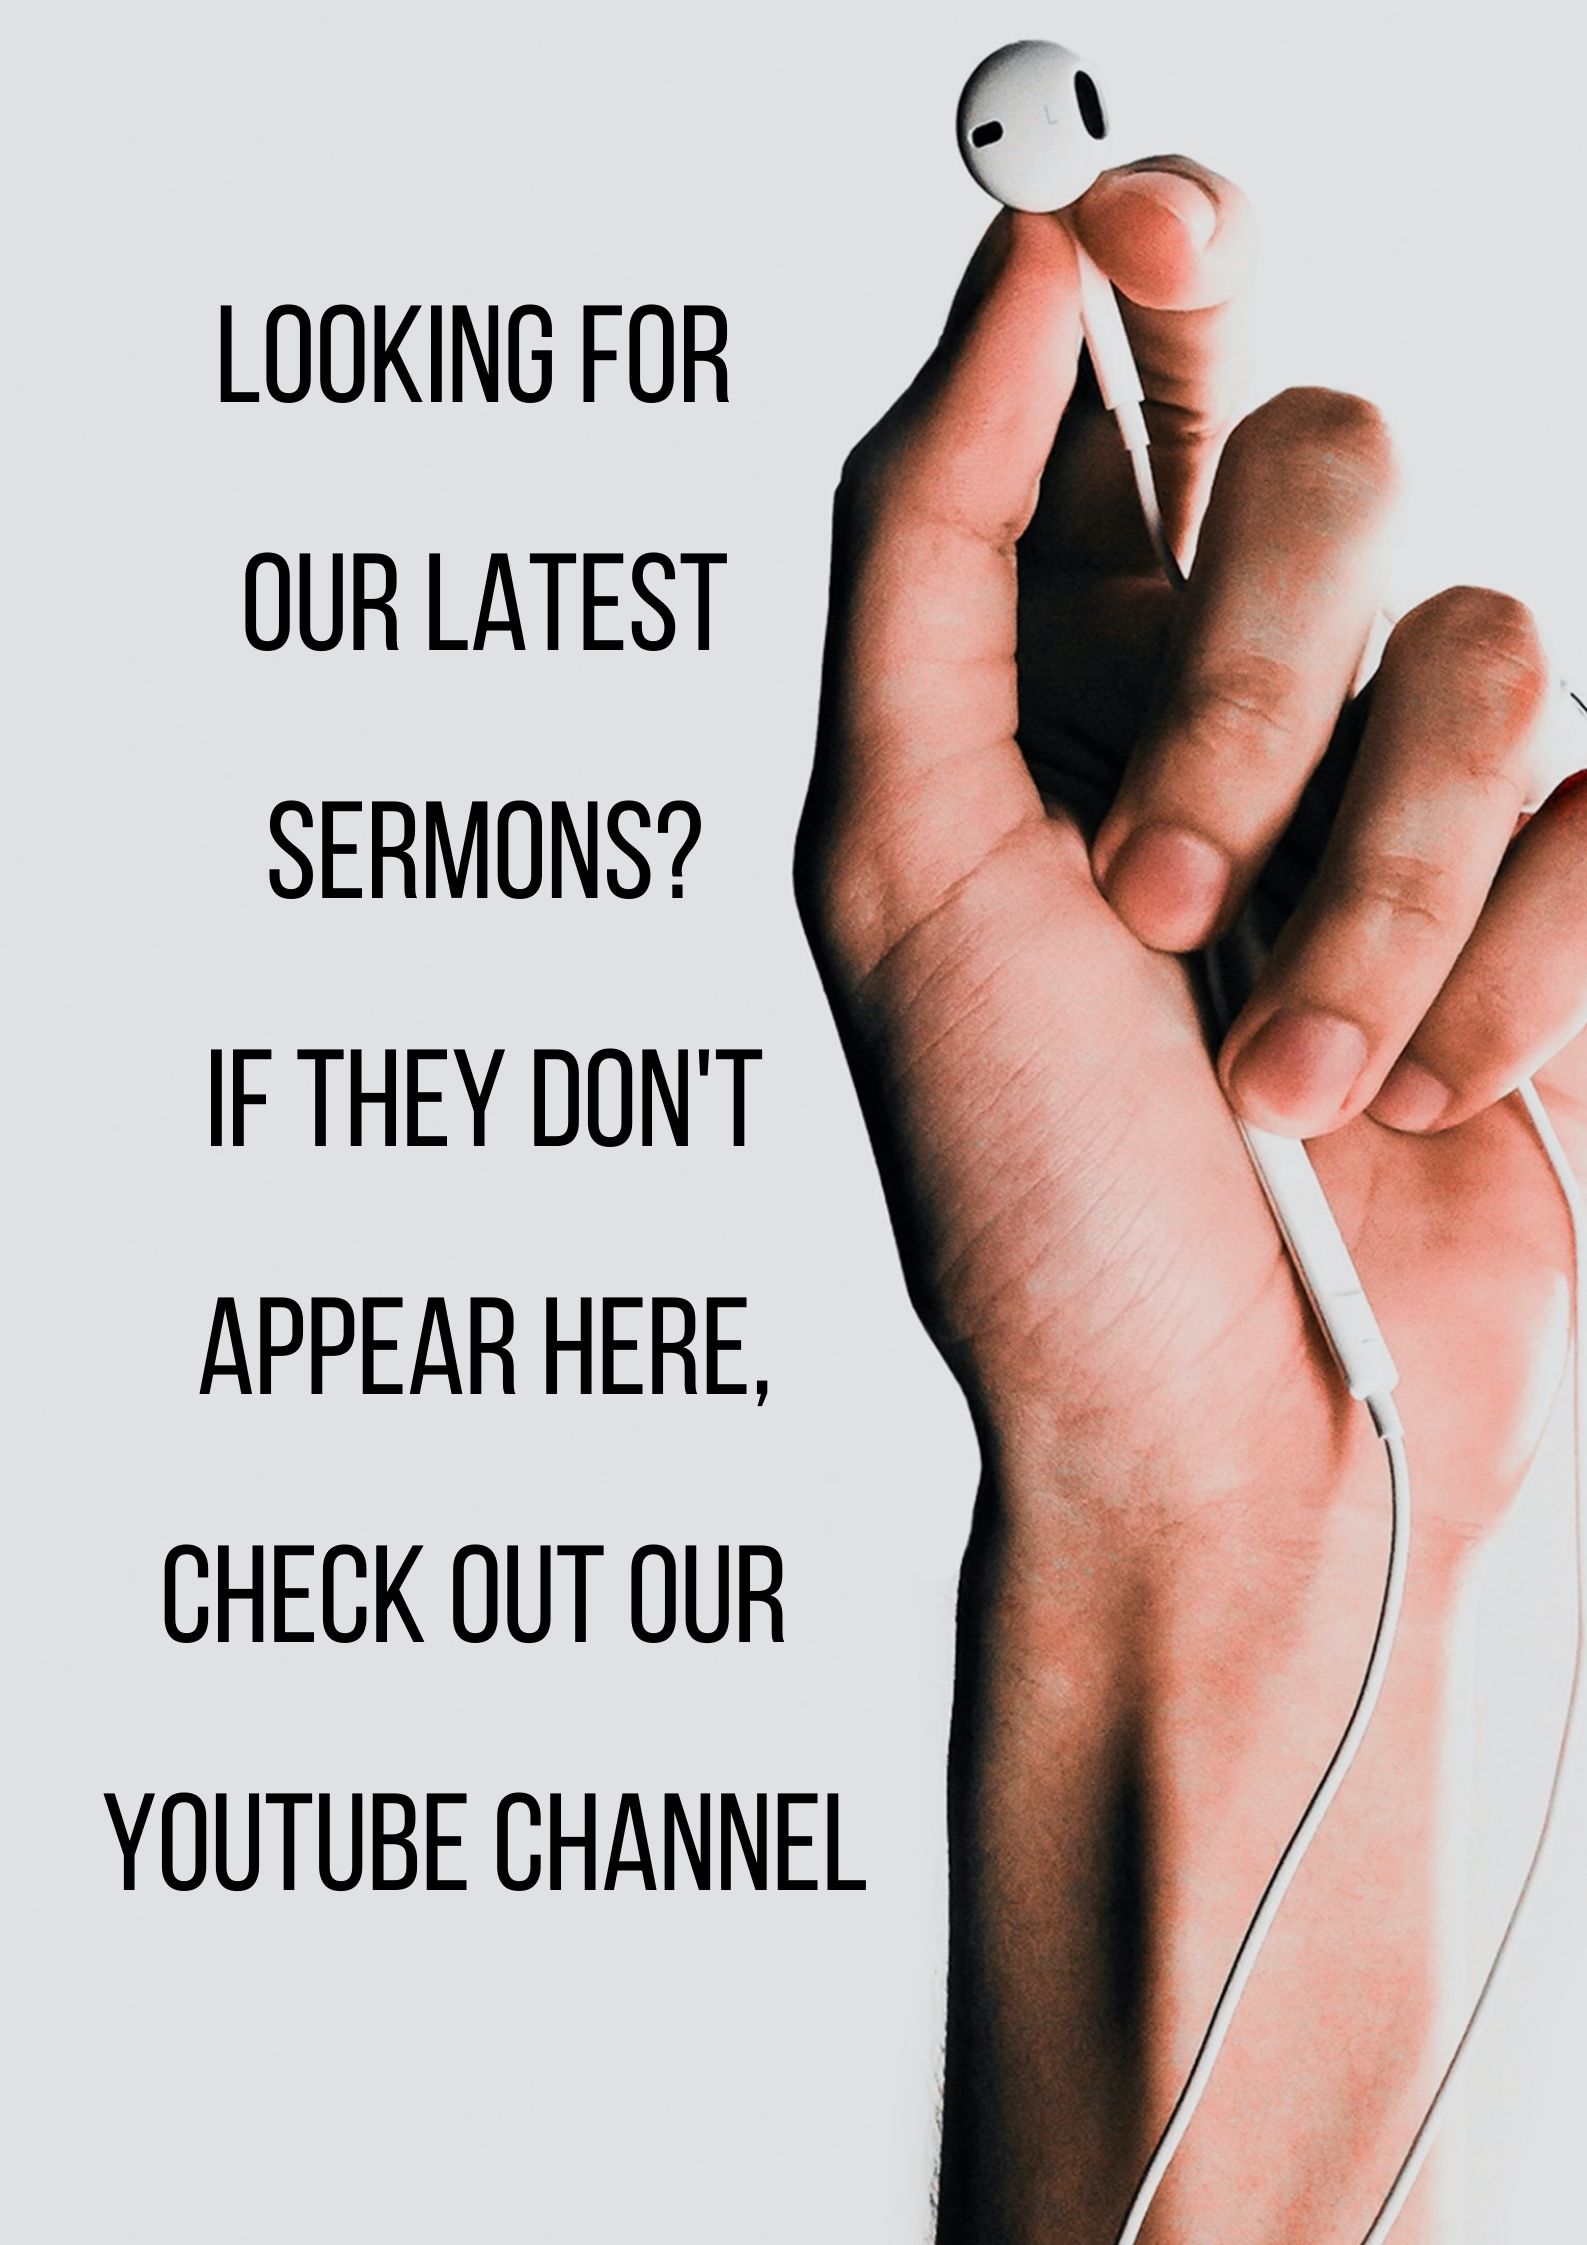 Sermon link